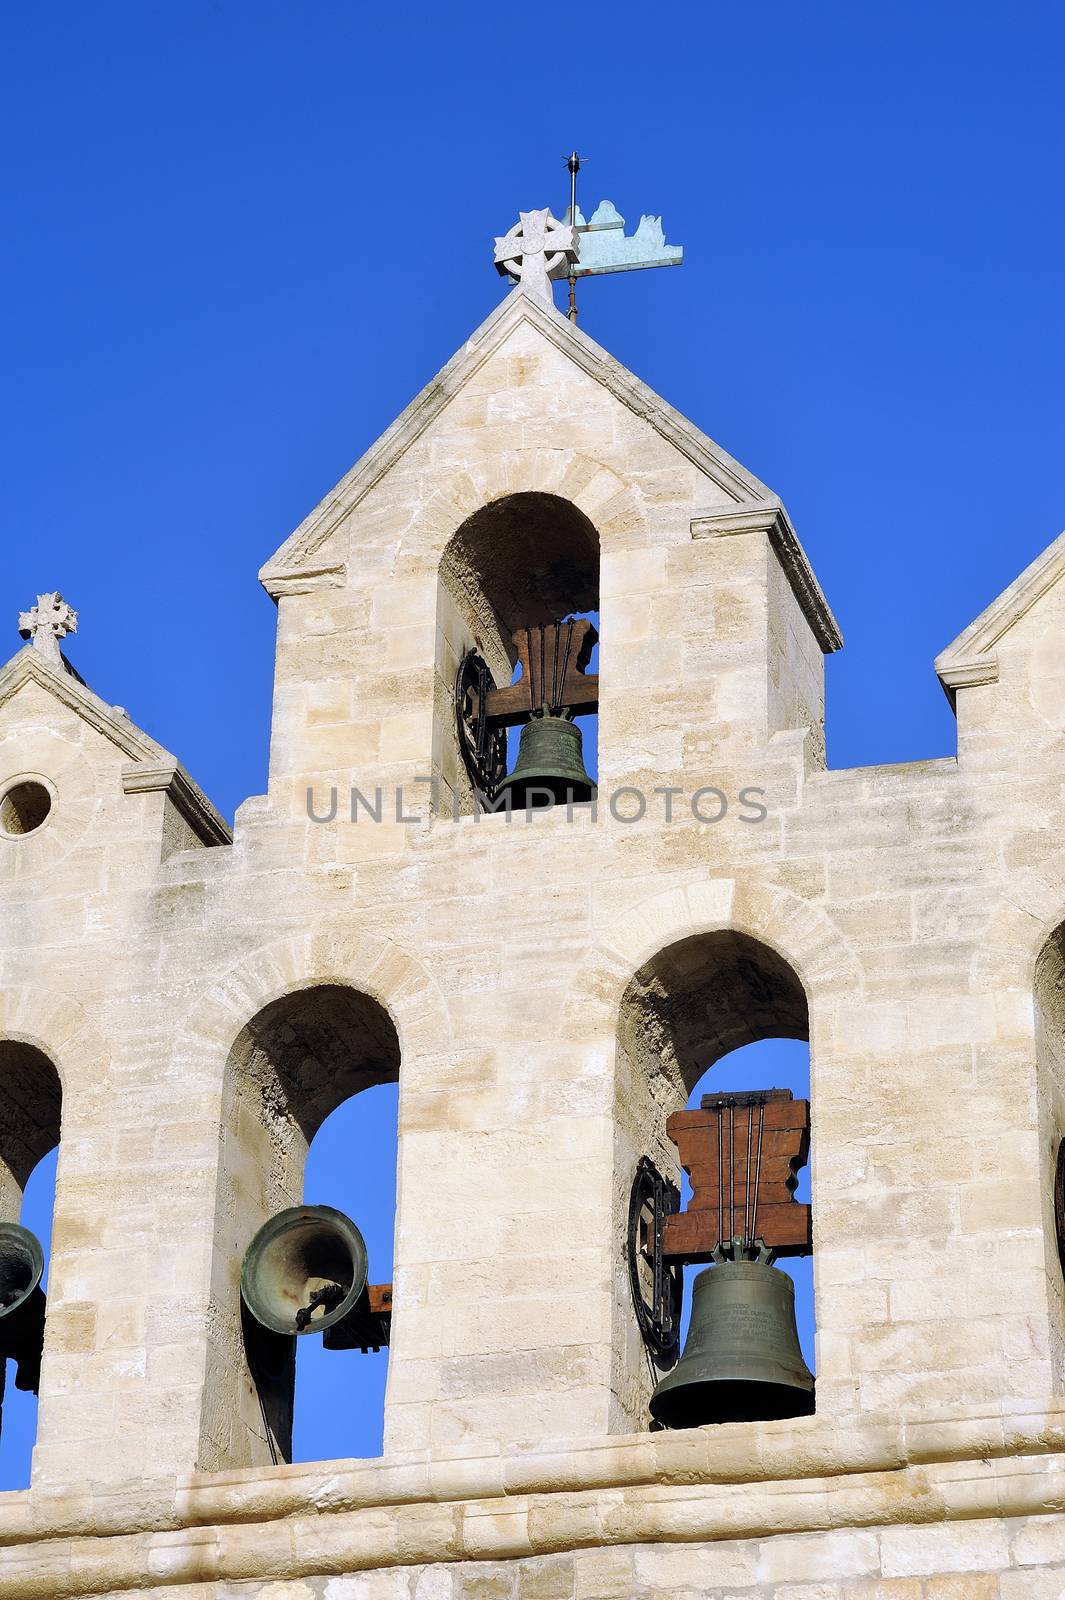 Steeple of the church of Saintes-Maries-de-la-Mer by gillespaire